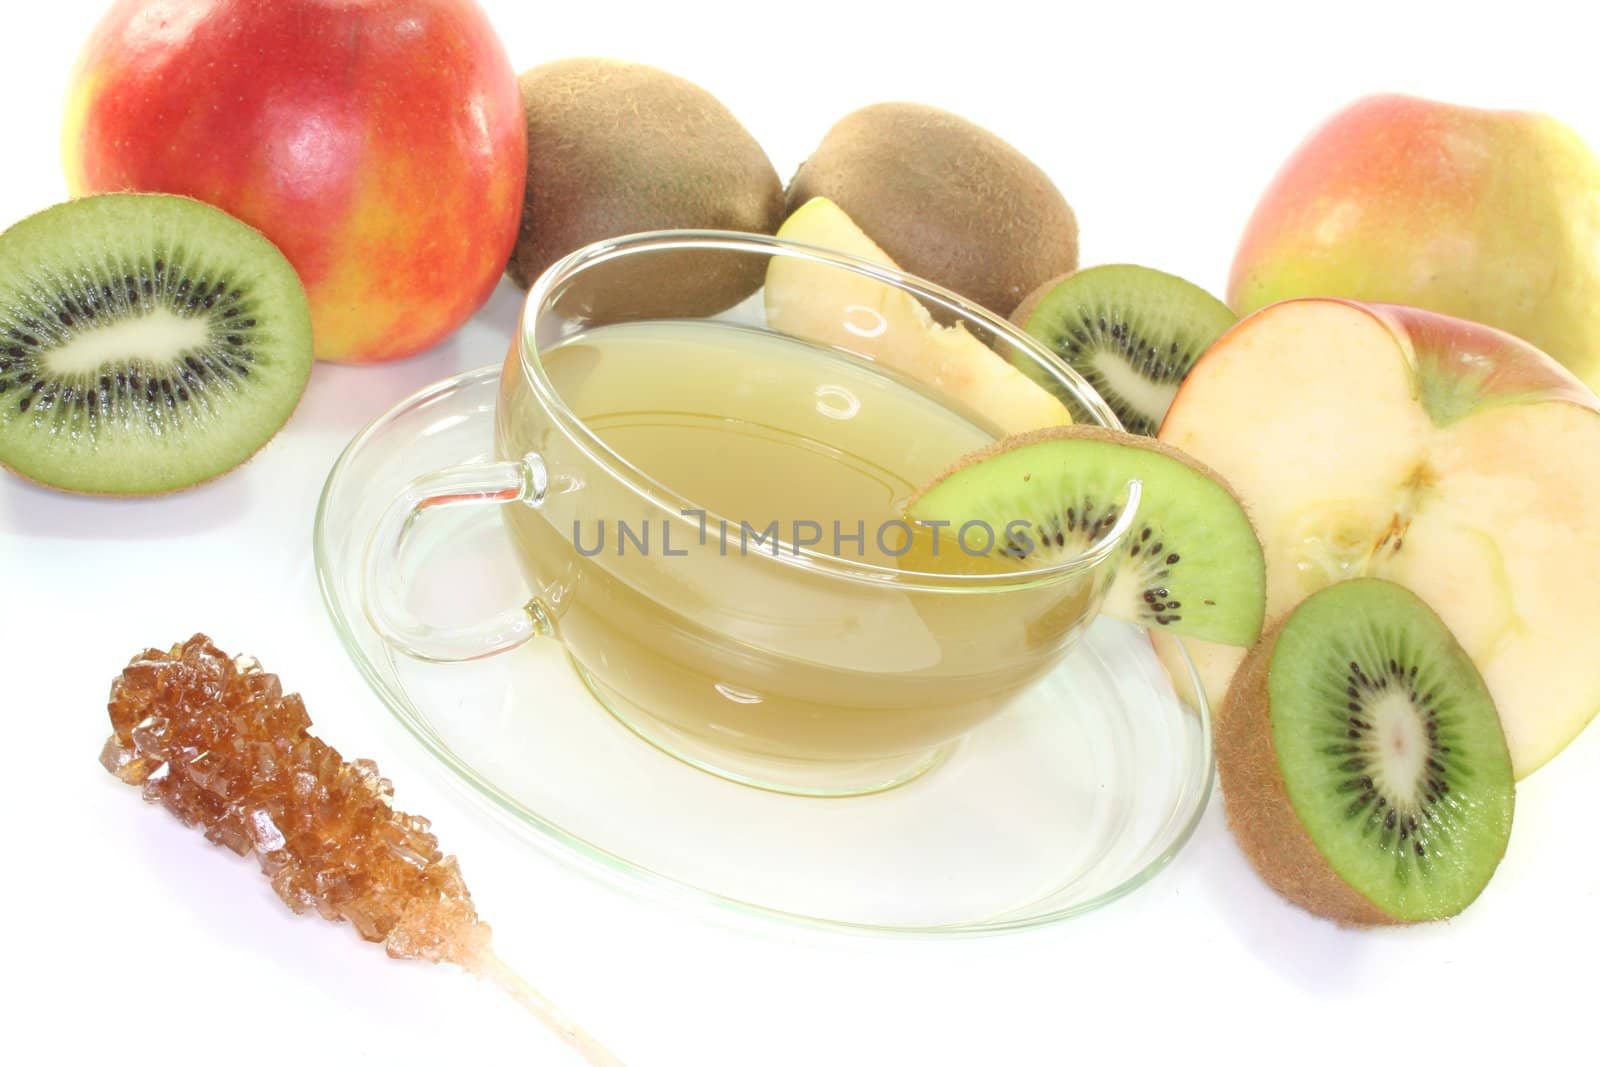 a glass of Kiwi and apple tea with fresh kiwis and apples